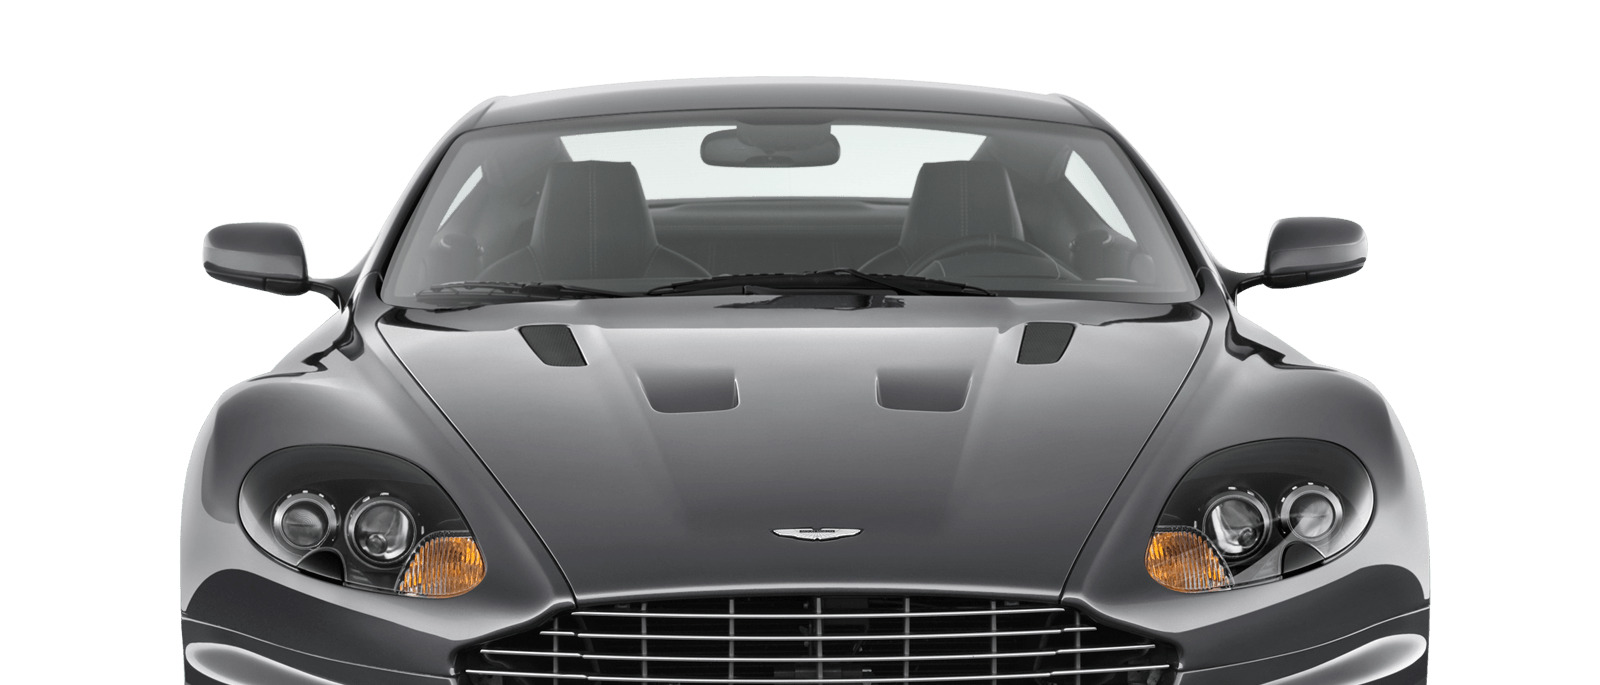 Db9 Front Aston Martin icons